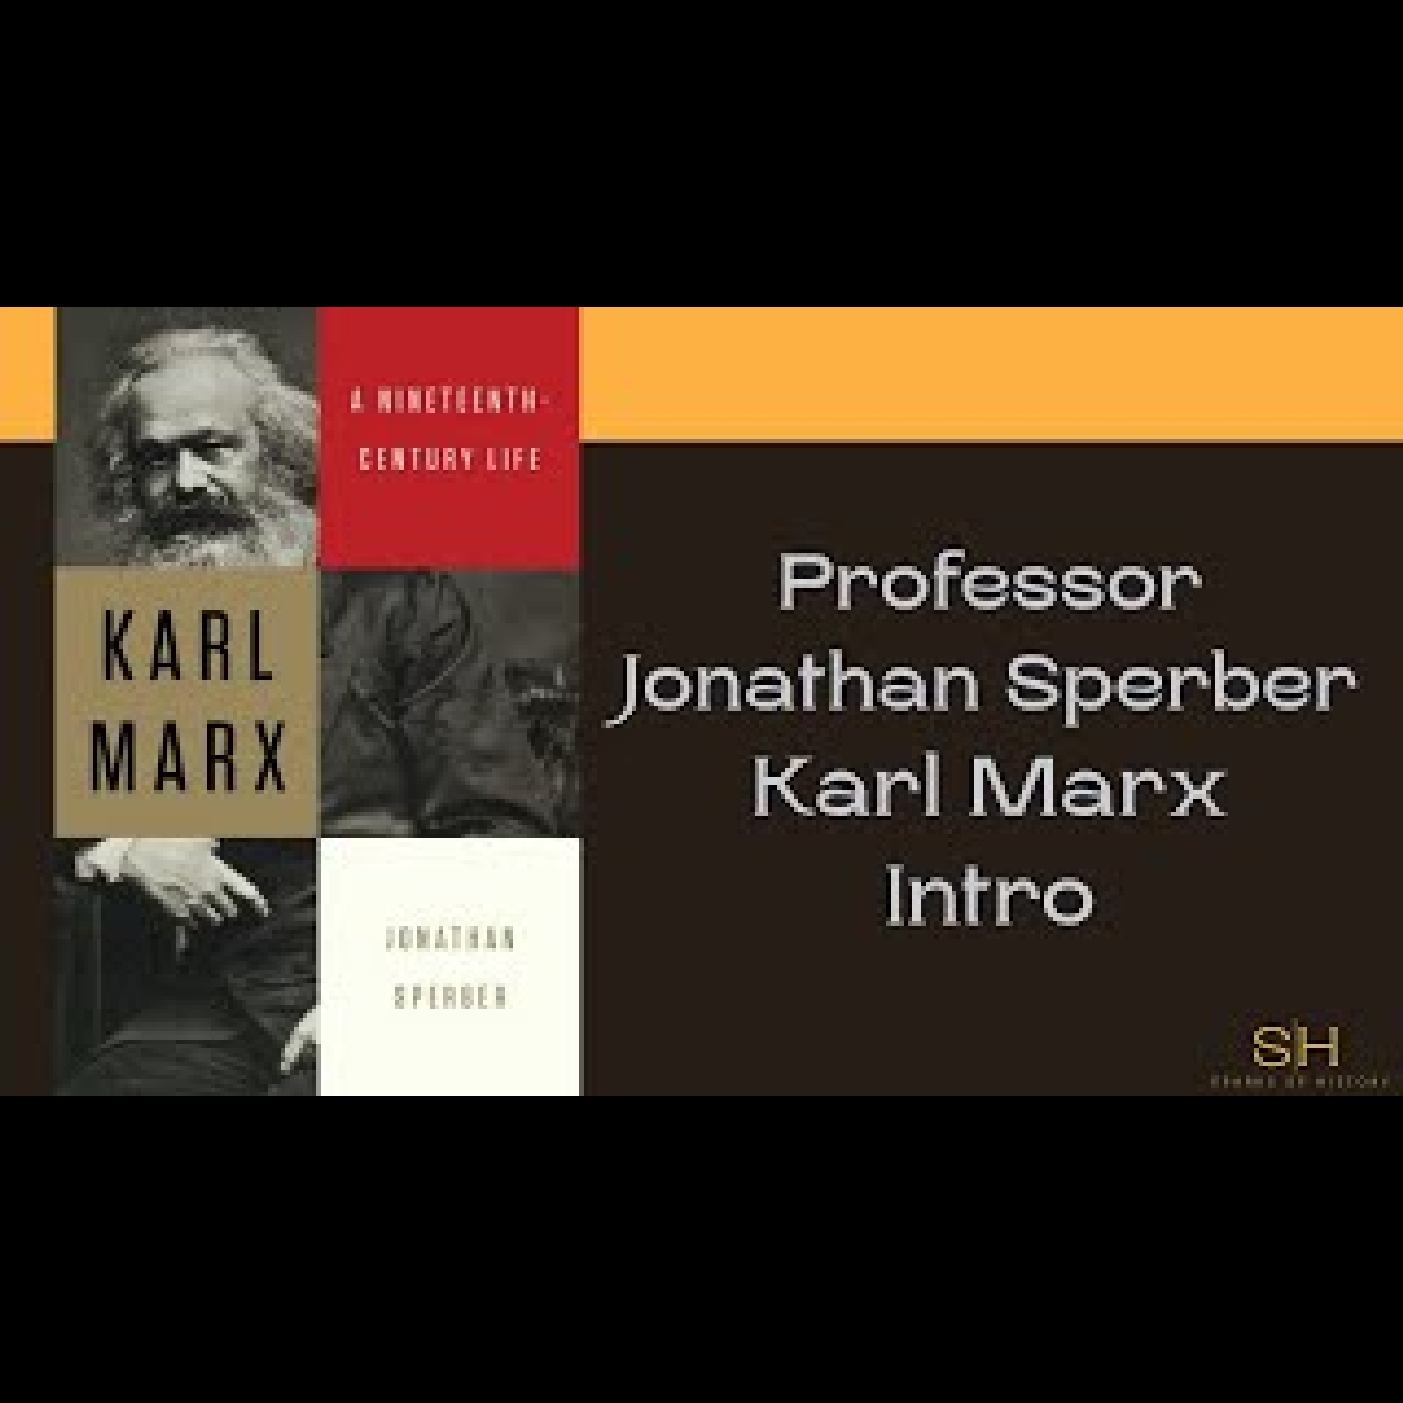 Karl Marx #1 - Interview Professor Jonathan Sperber